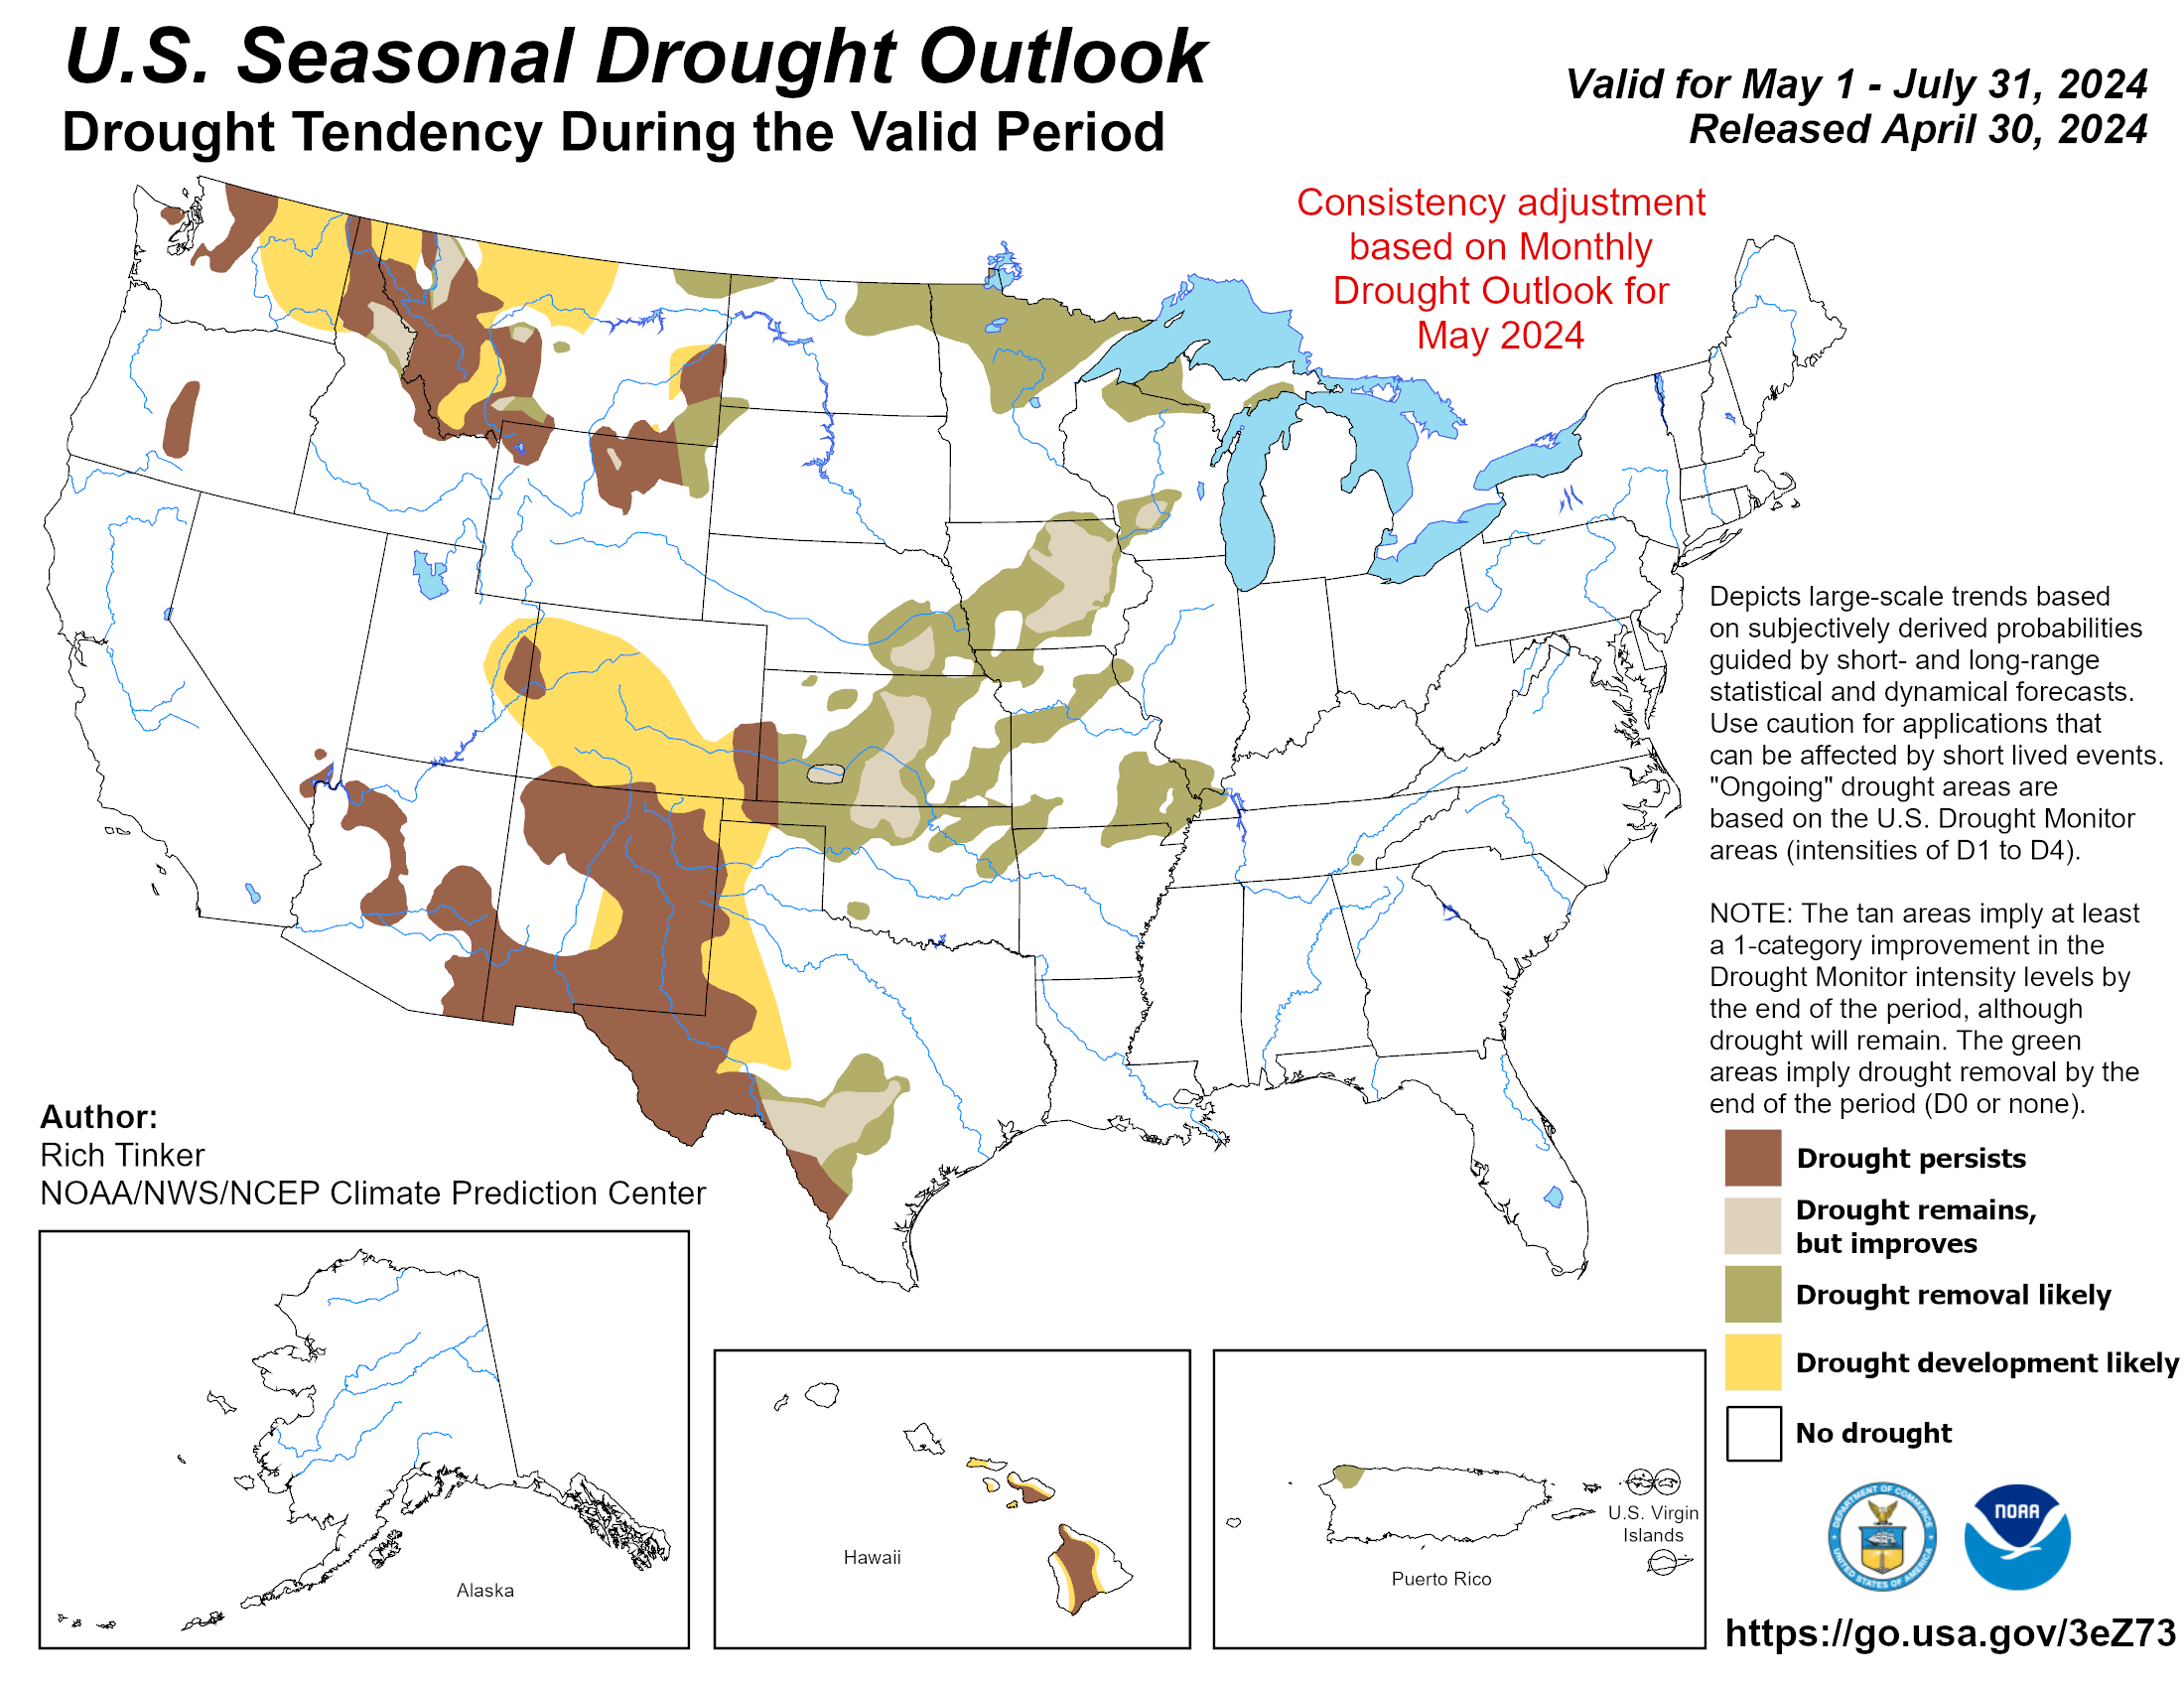 U.S. Drought Assessment Outlook